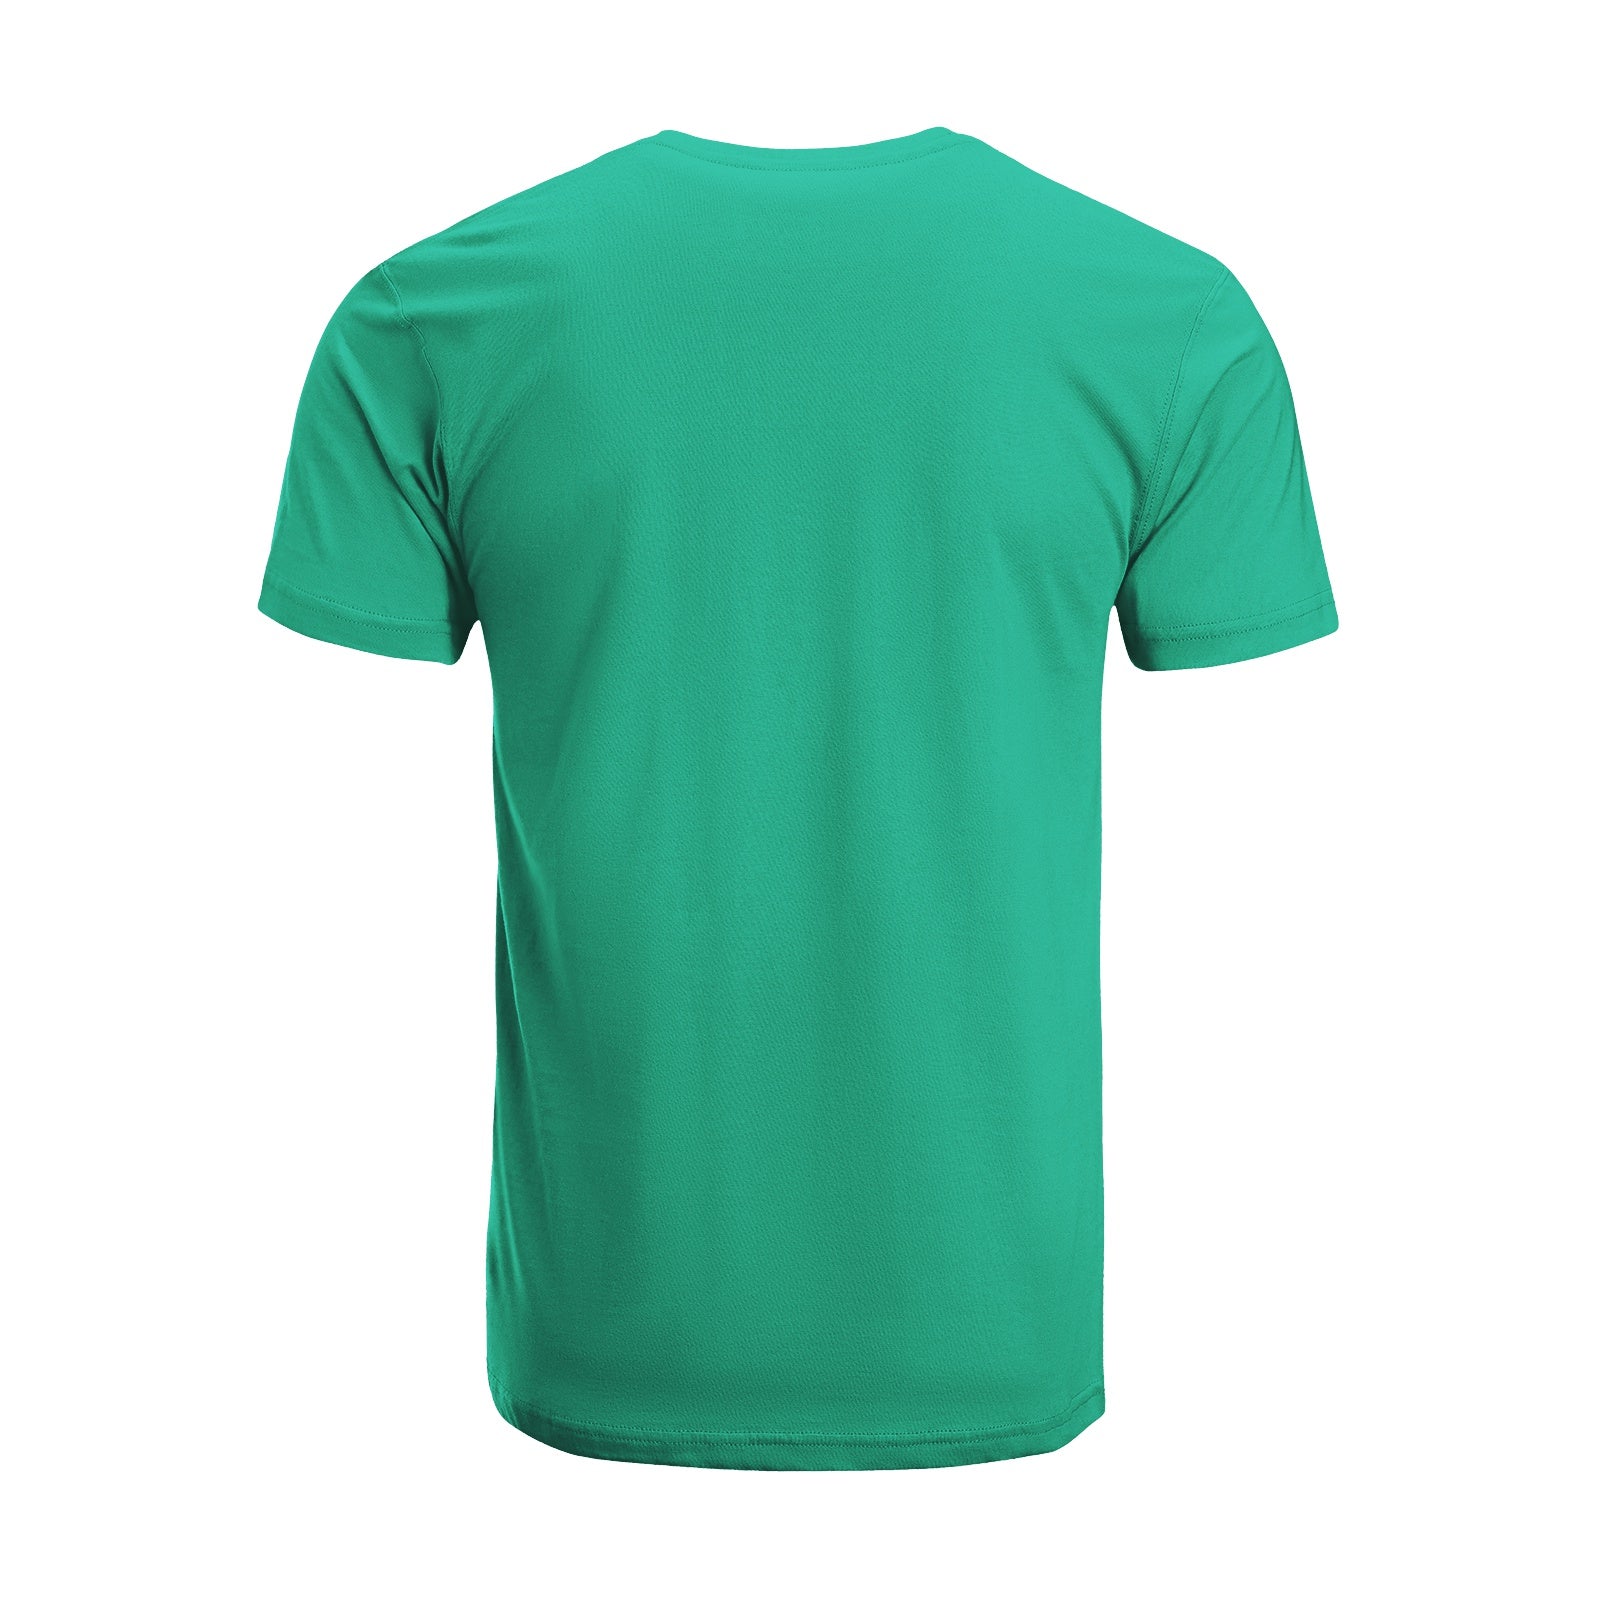 Unisex Short Sleeve Crew Neck Cotton Jersey T-Shirt CAT 03 - Tara-Outfits.com